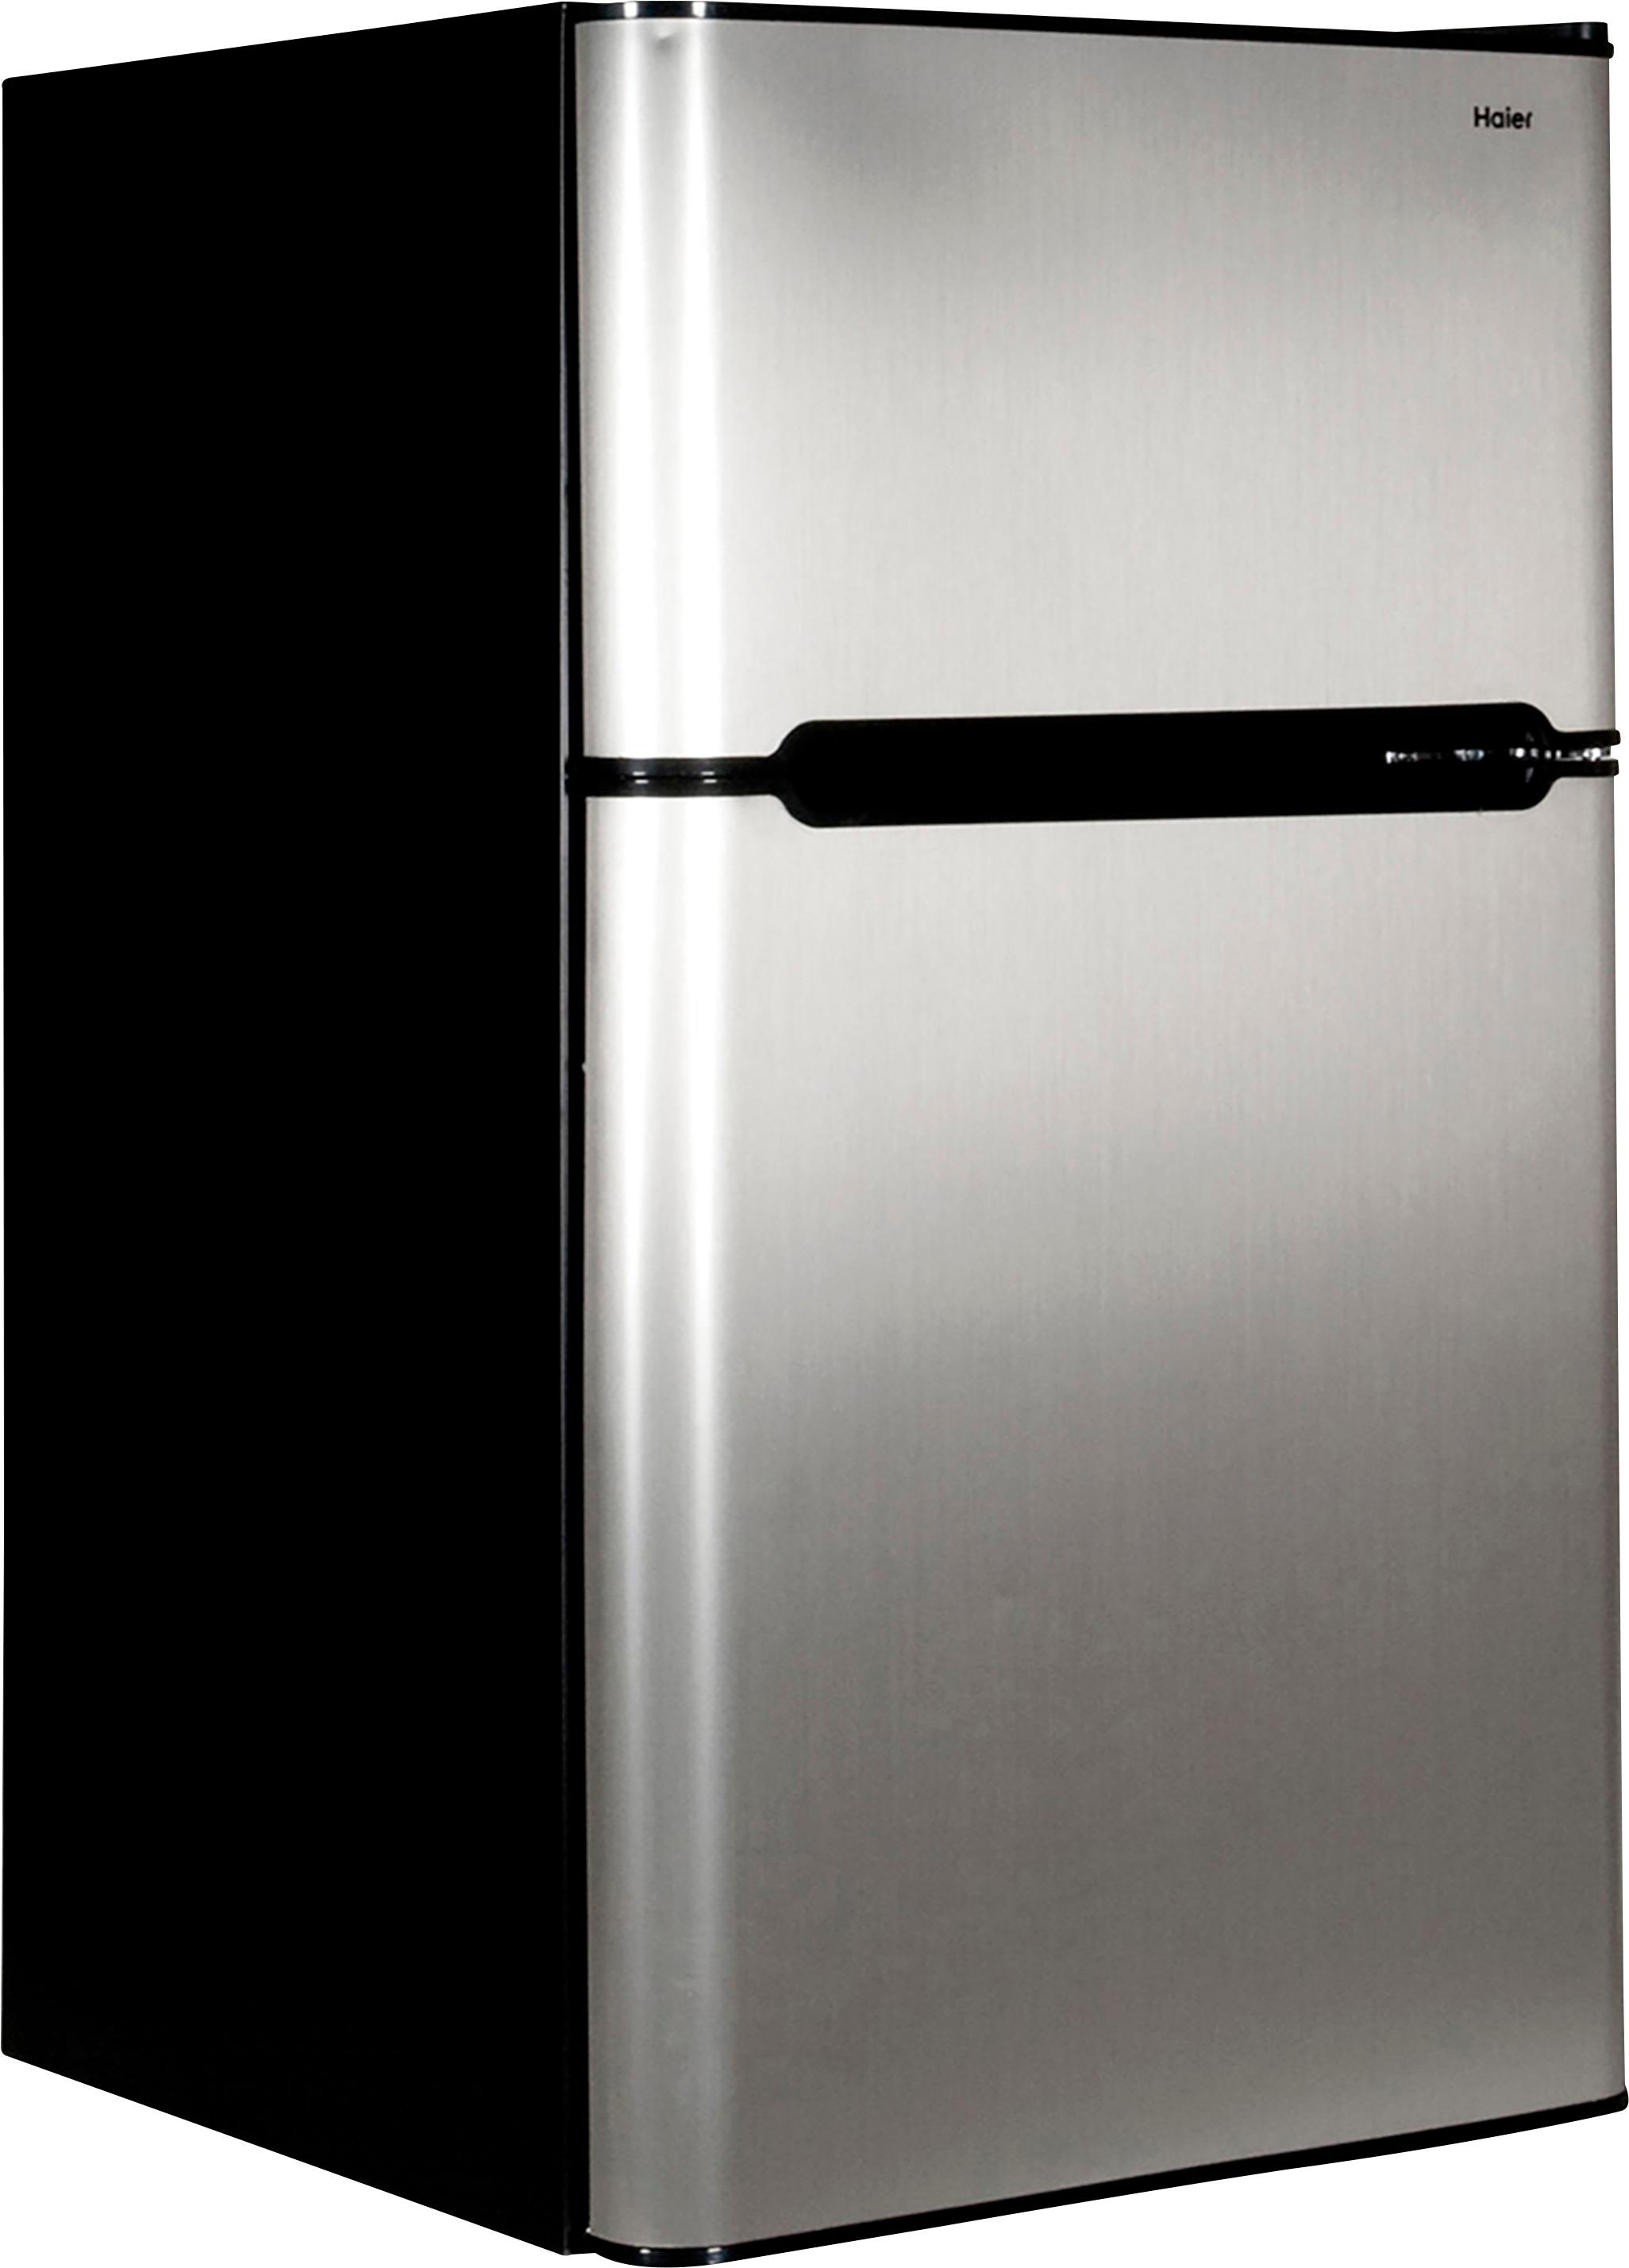 Haier mini refrigerator - McLaughlin Auctioneers, LLC